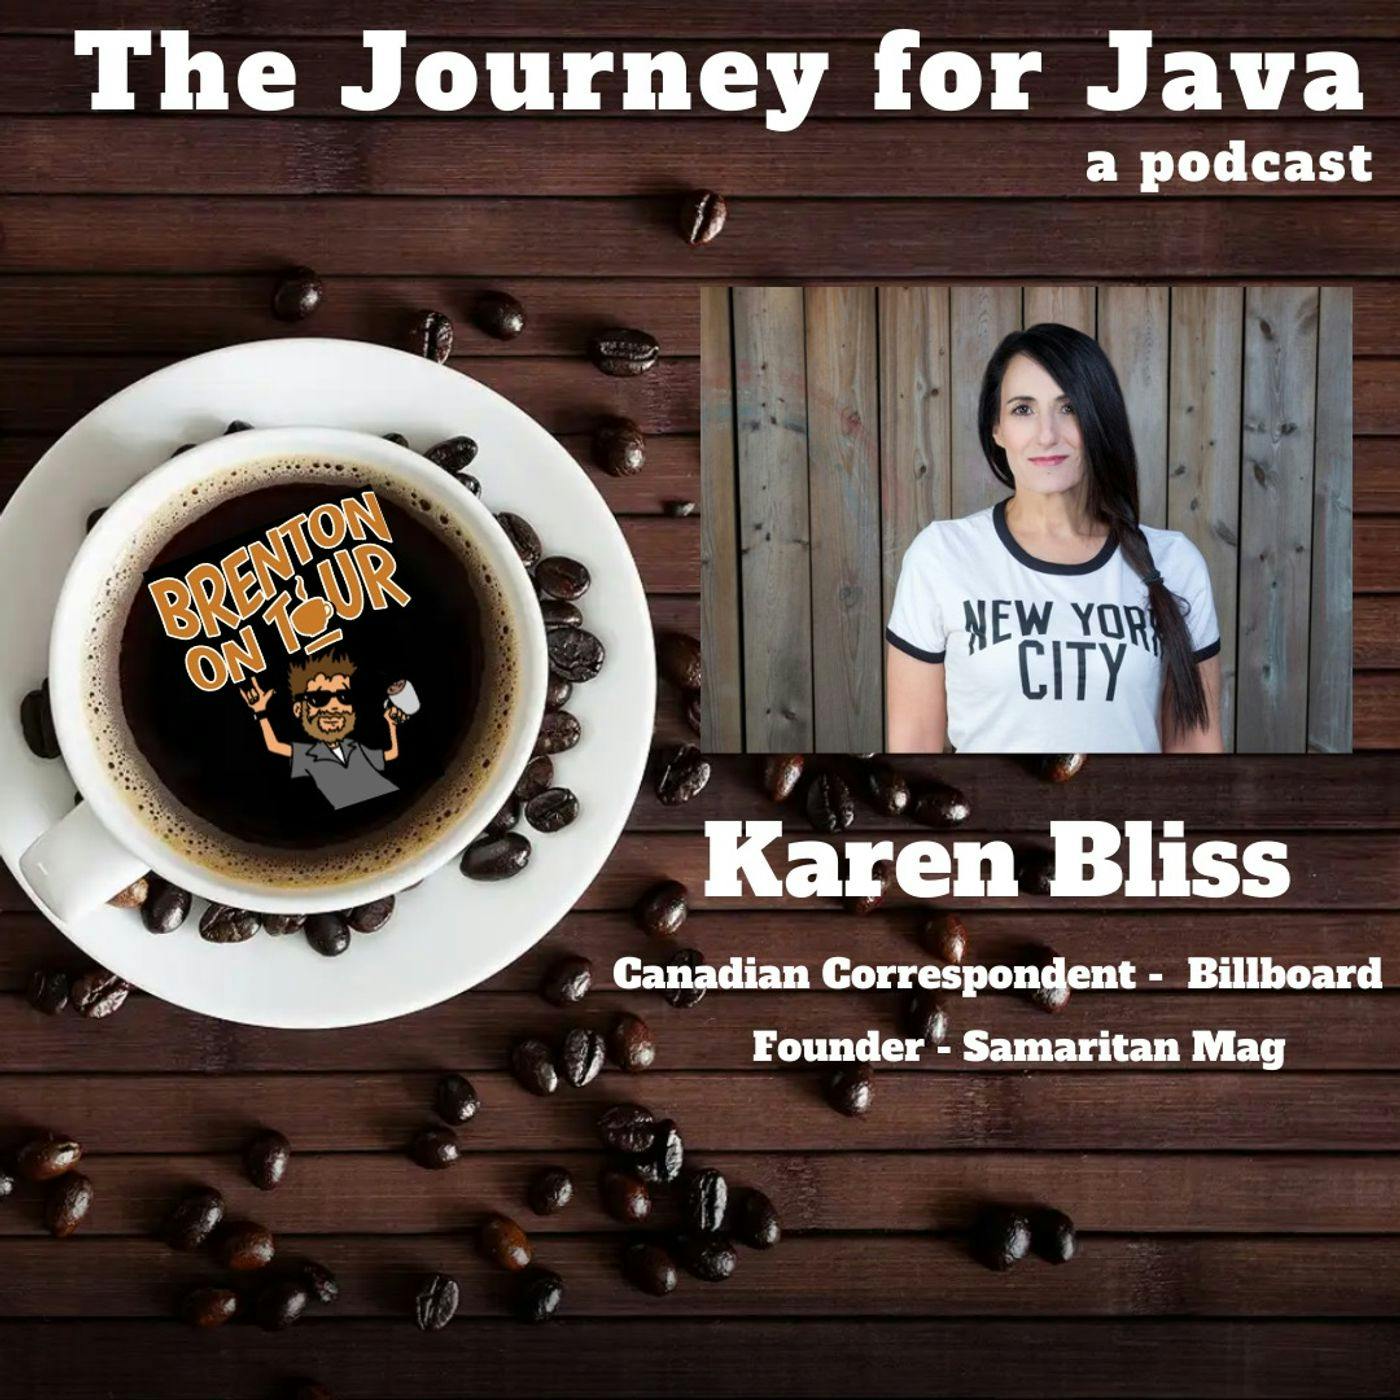 Karen Bliss (Canadian Correspondent - Billboard, Founder - Samaritan Mag)